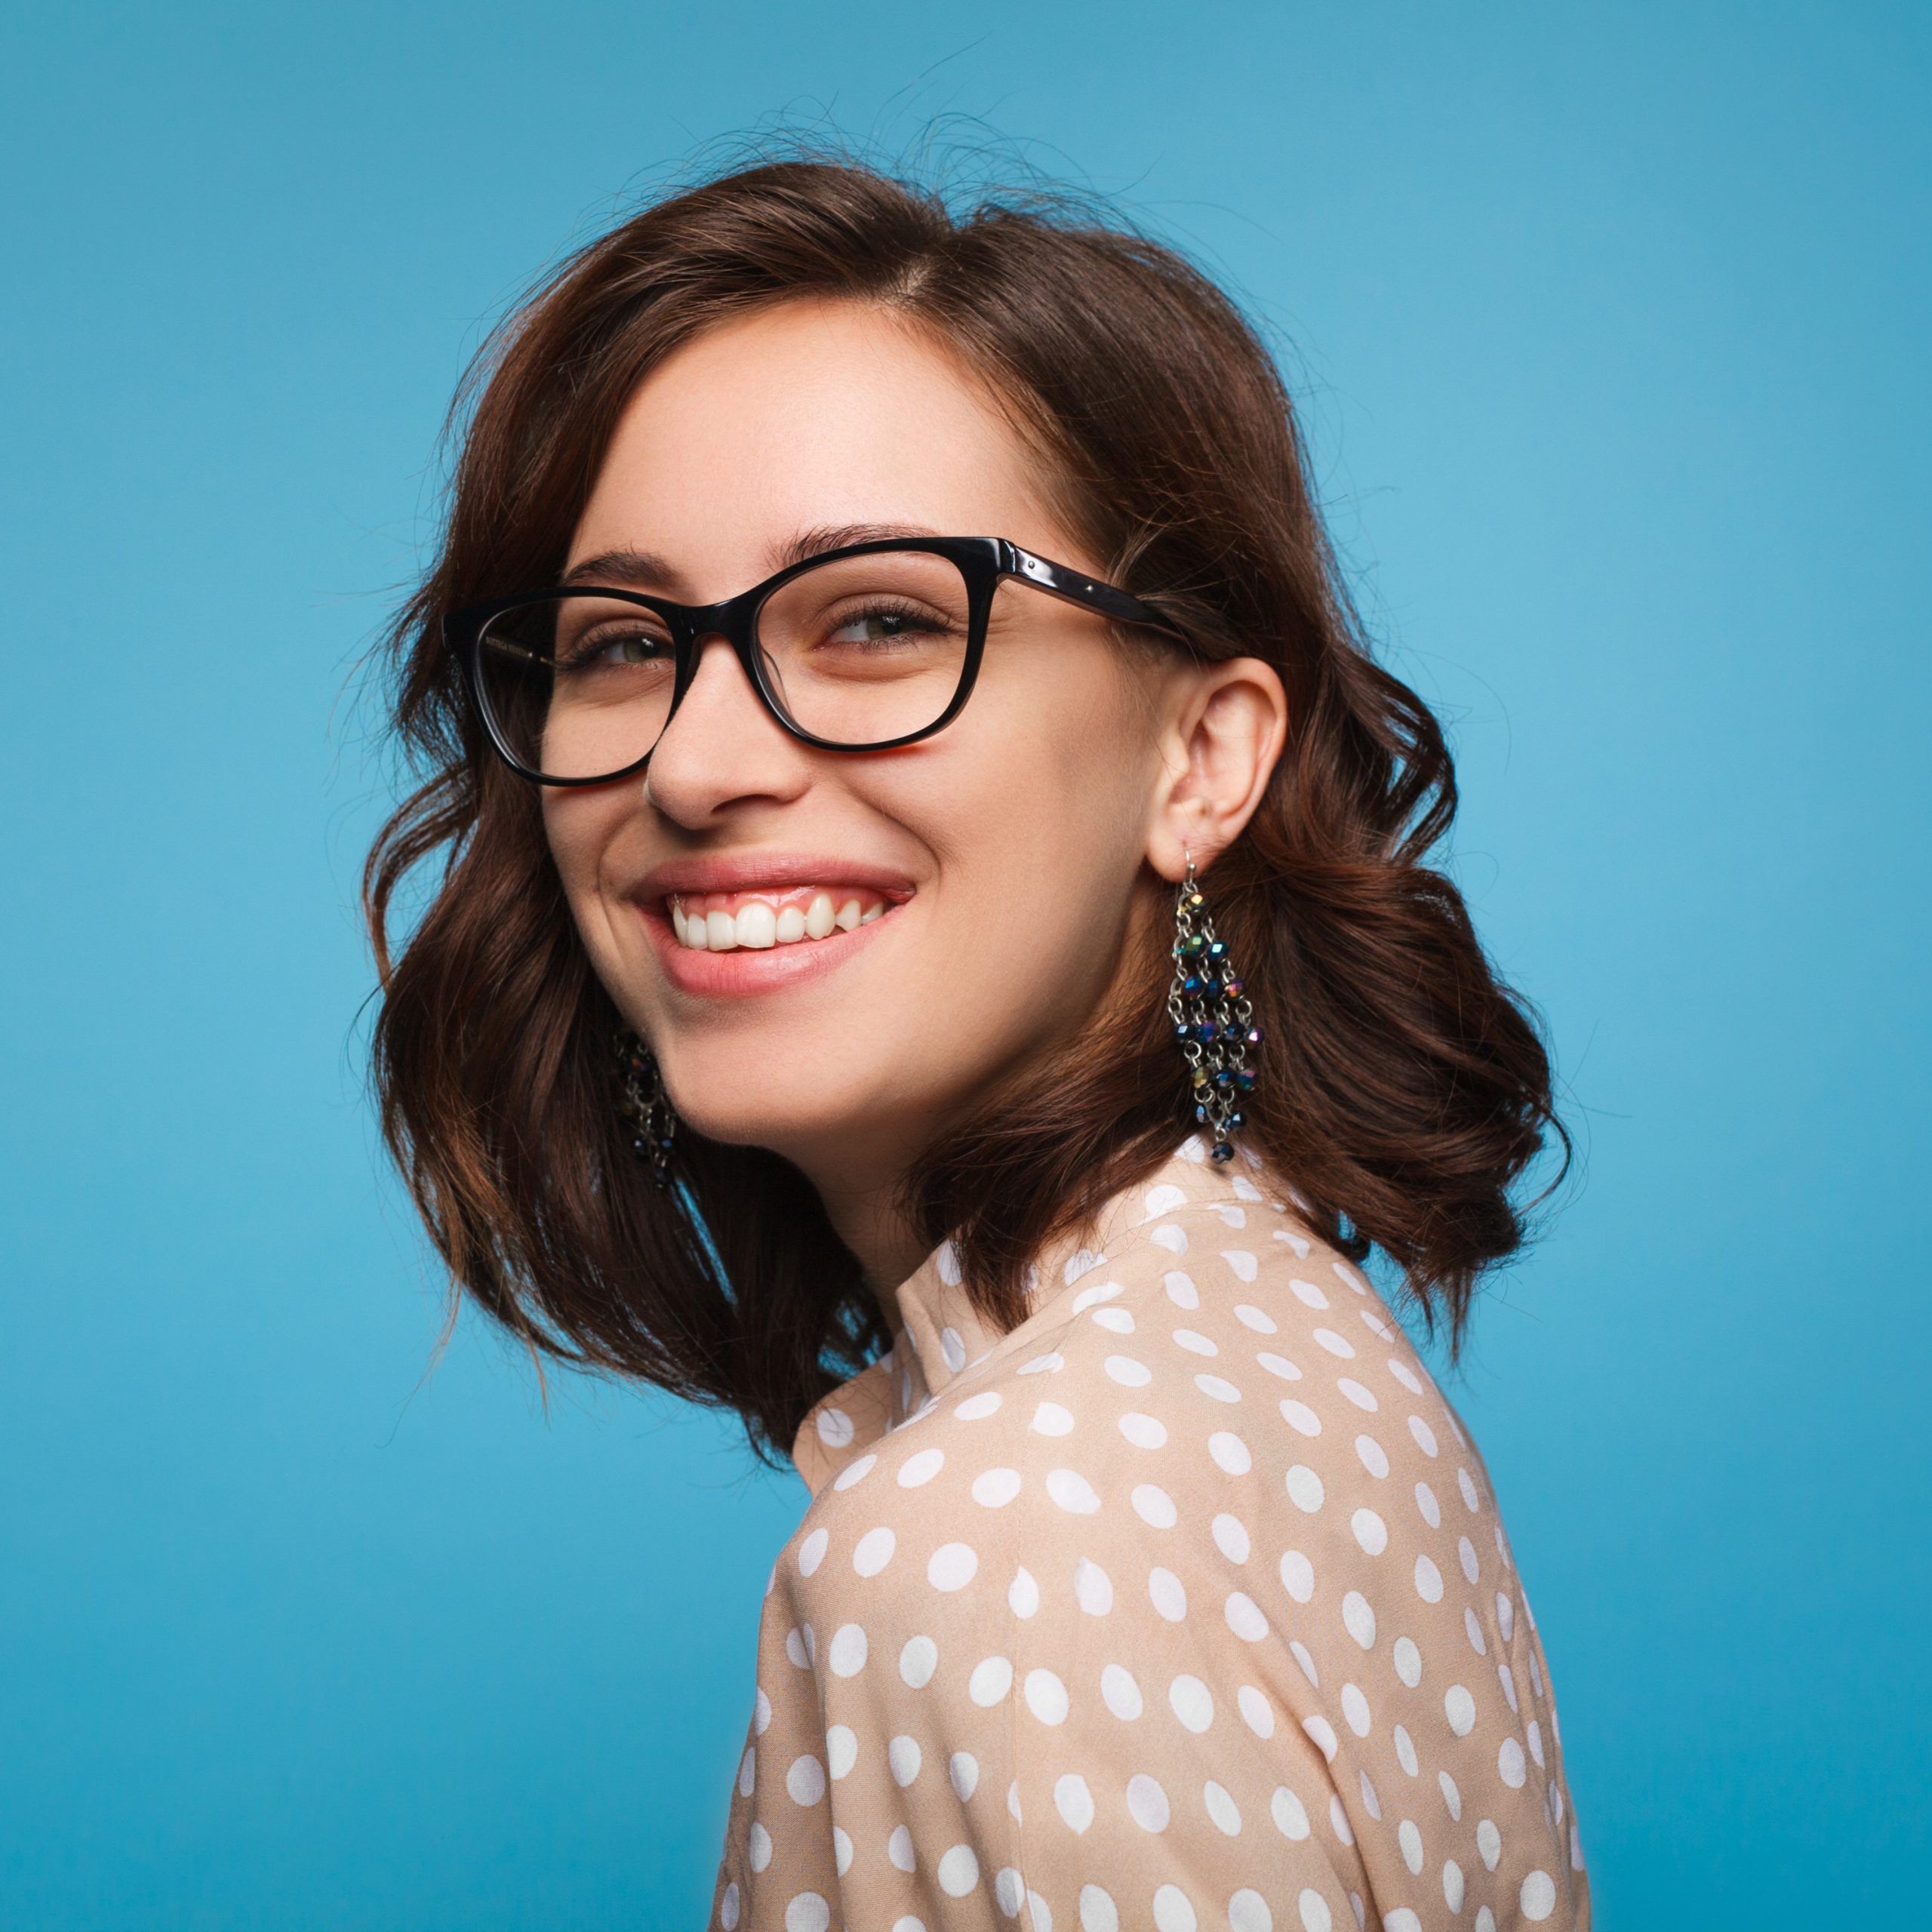 Smiling woman posing in glasses